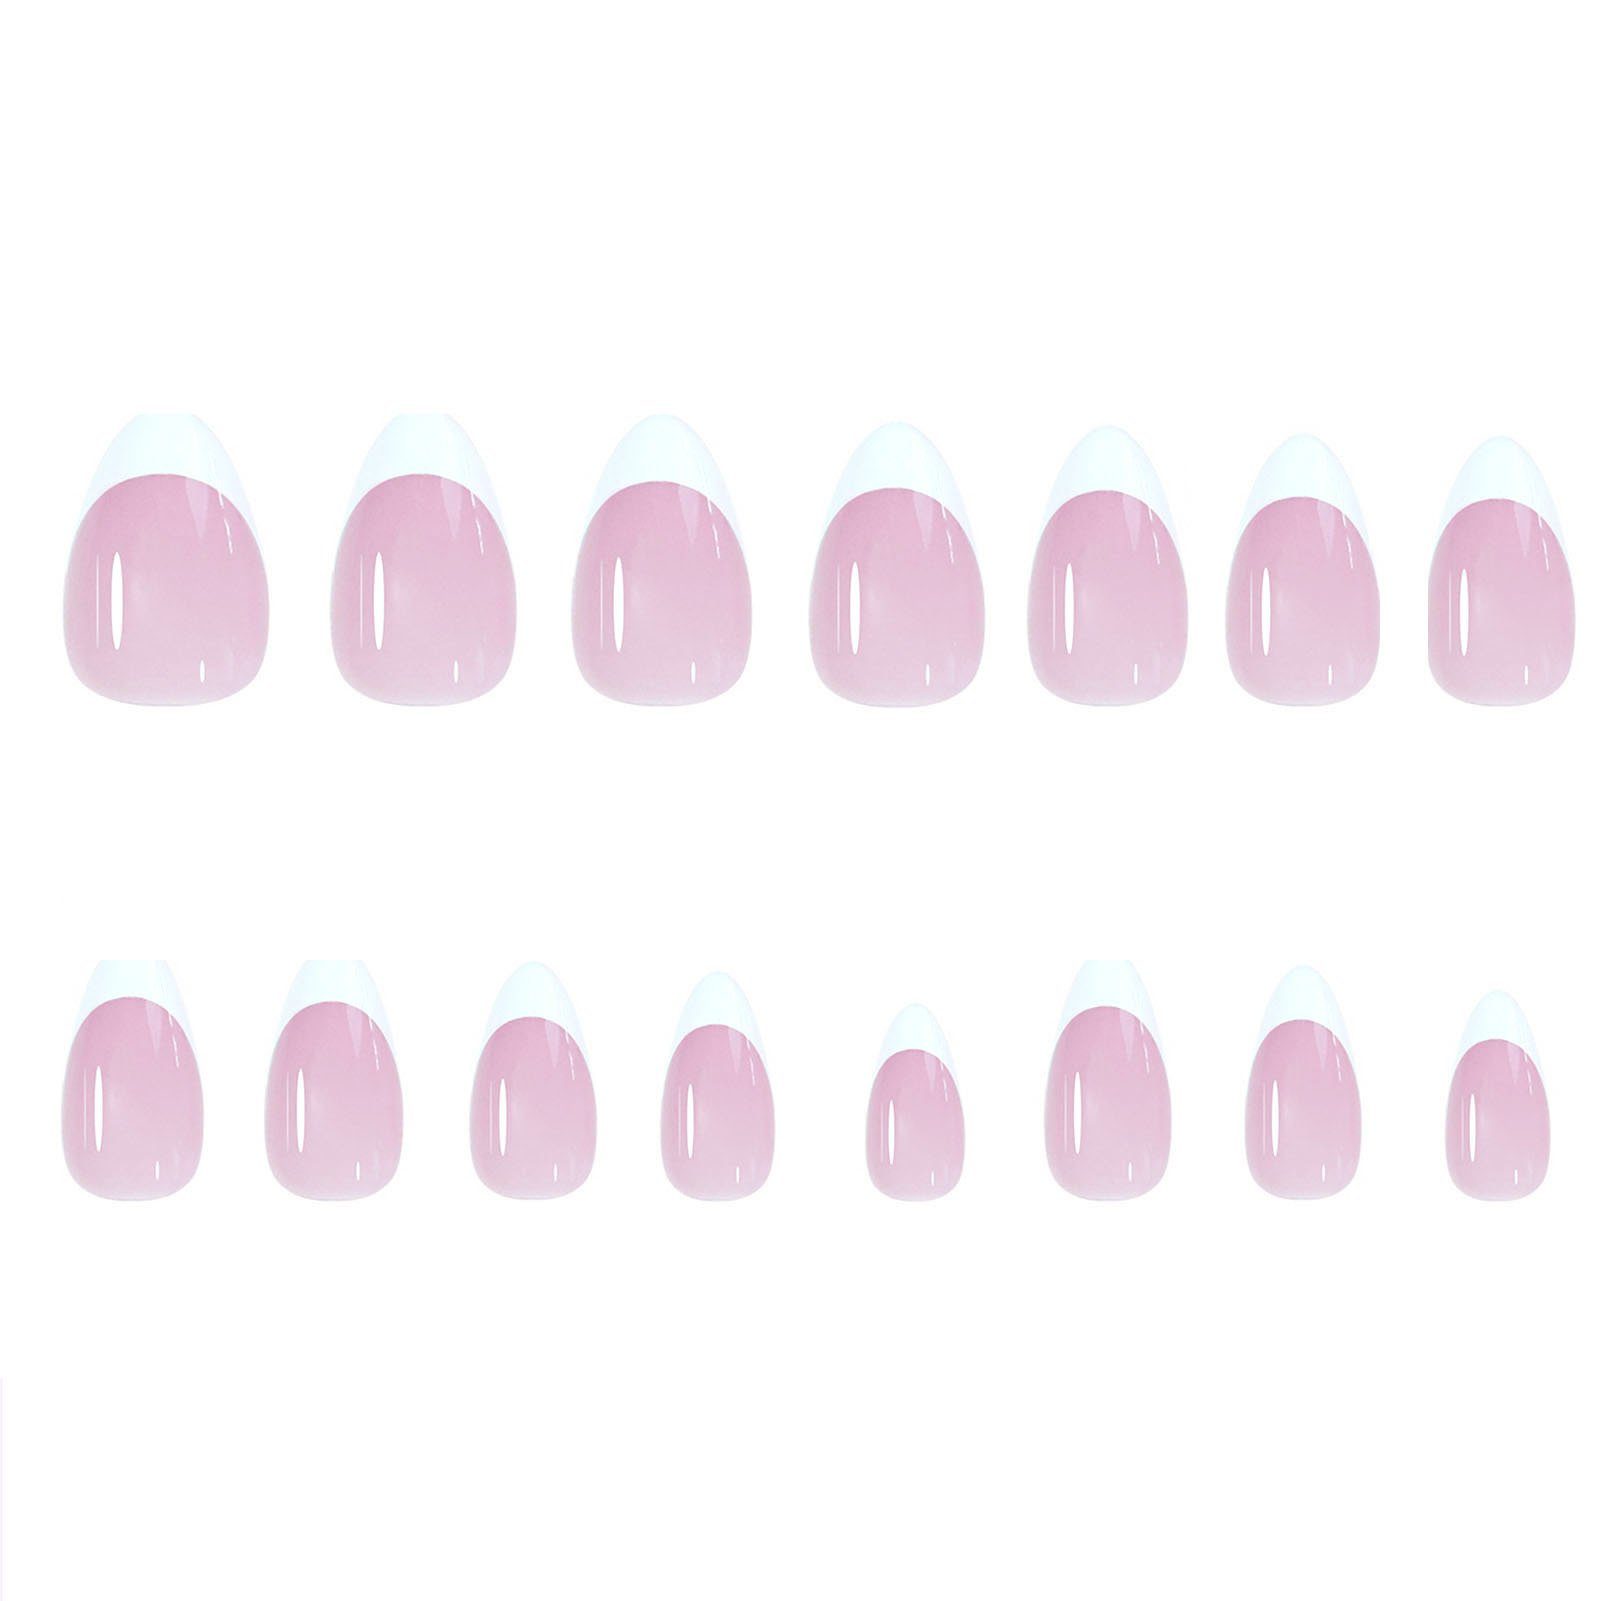 Nagelflicken Frauen Für Kunstfingernägel Nagelaufkleber, Kunstfingernägel, Blusmart 05 Abnehmbare